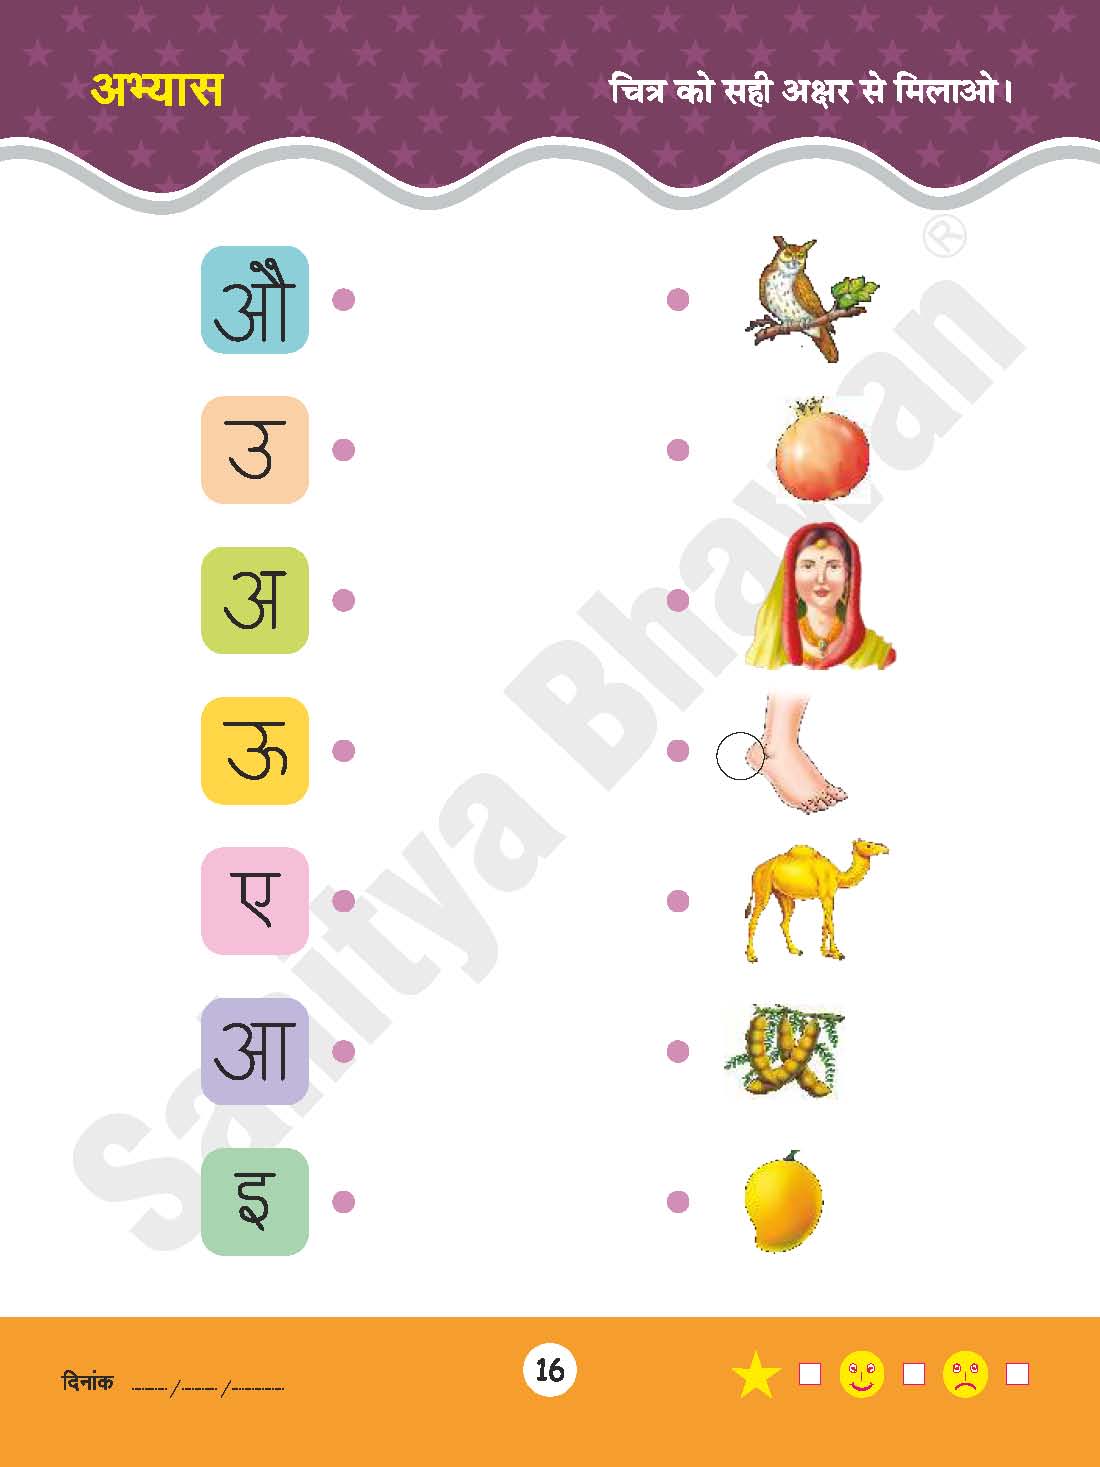 260 3d Hindi Alphabet Images Stock Photos  Vectors  Shutterstock